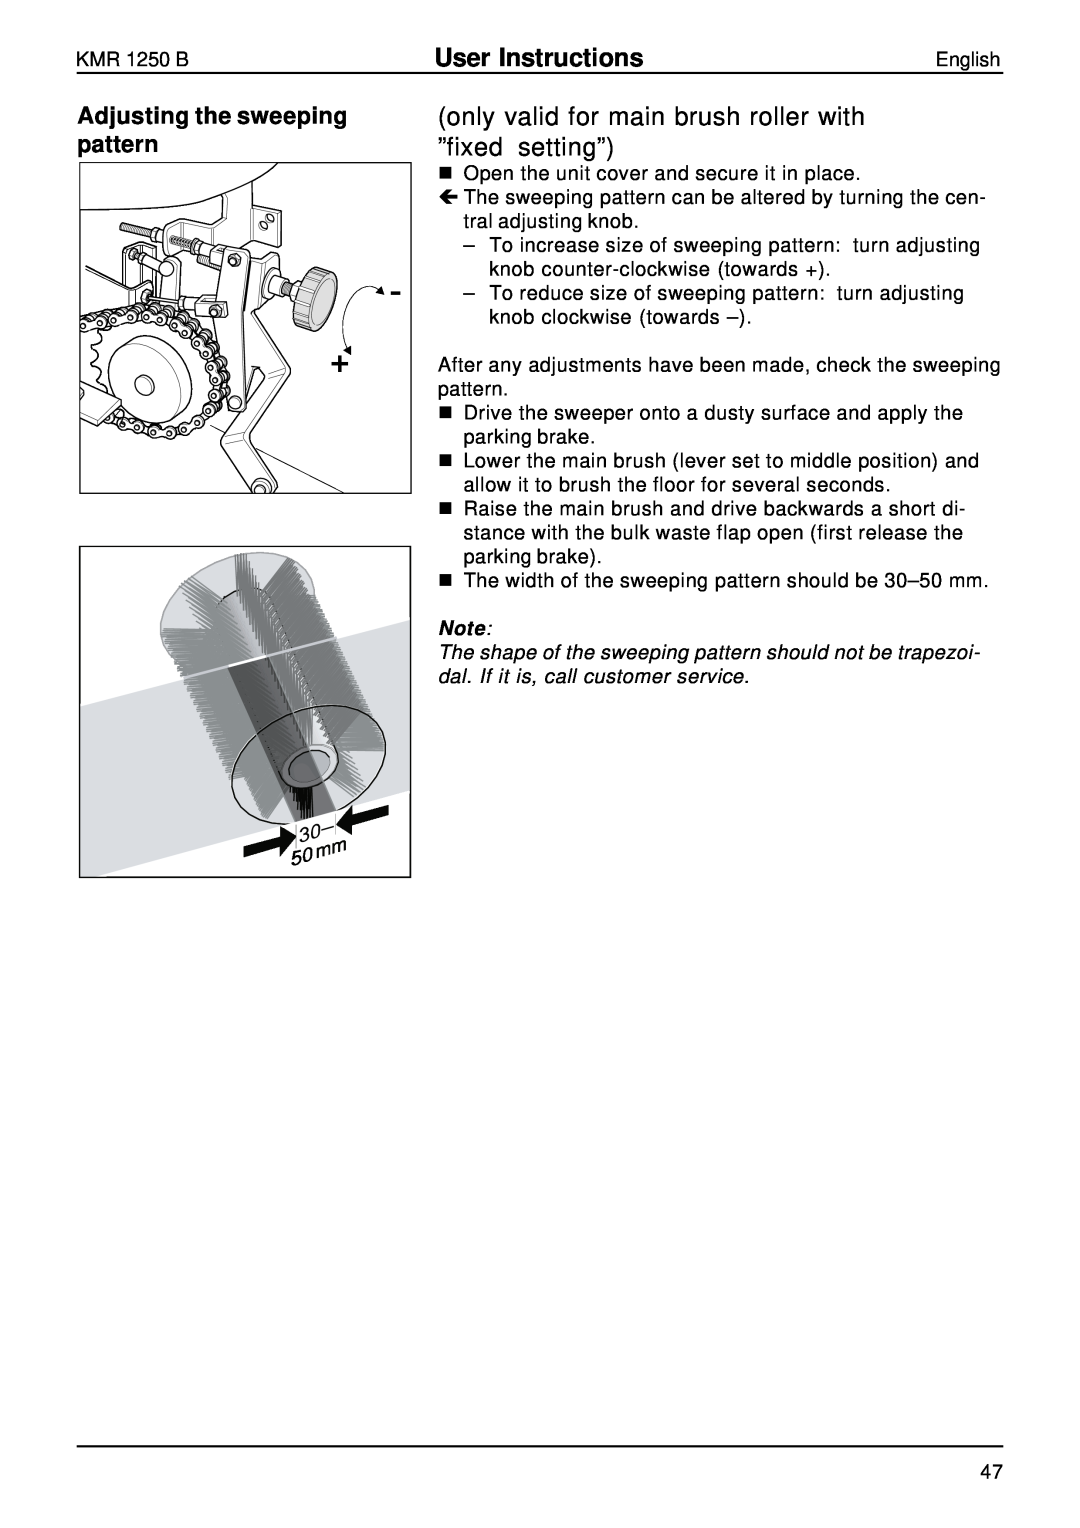 Karcher KMR 1250 B manual Adjusting the sweeping pattern, User Instructions 